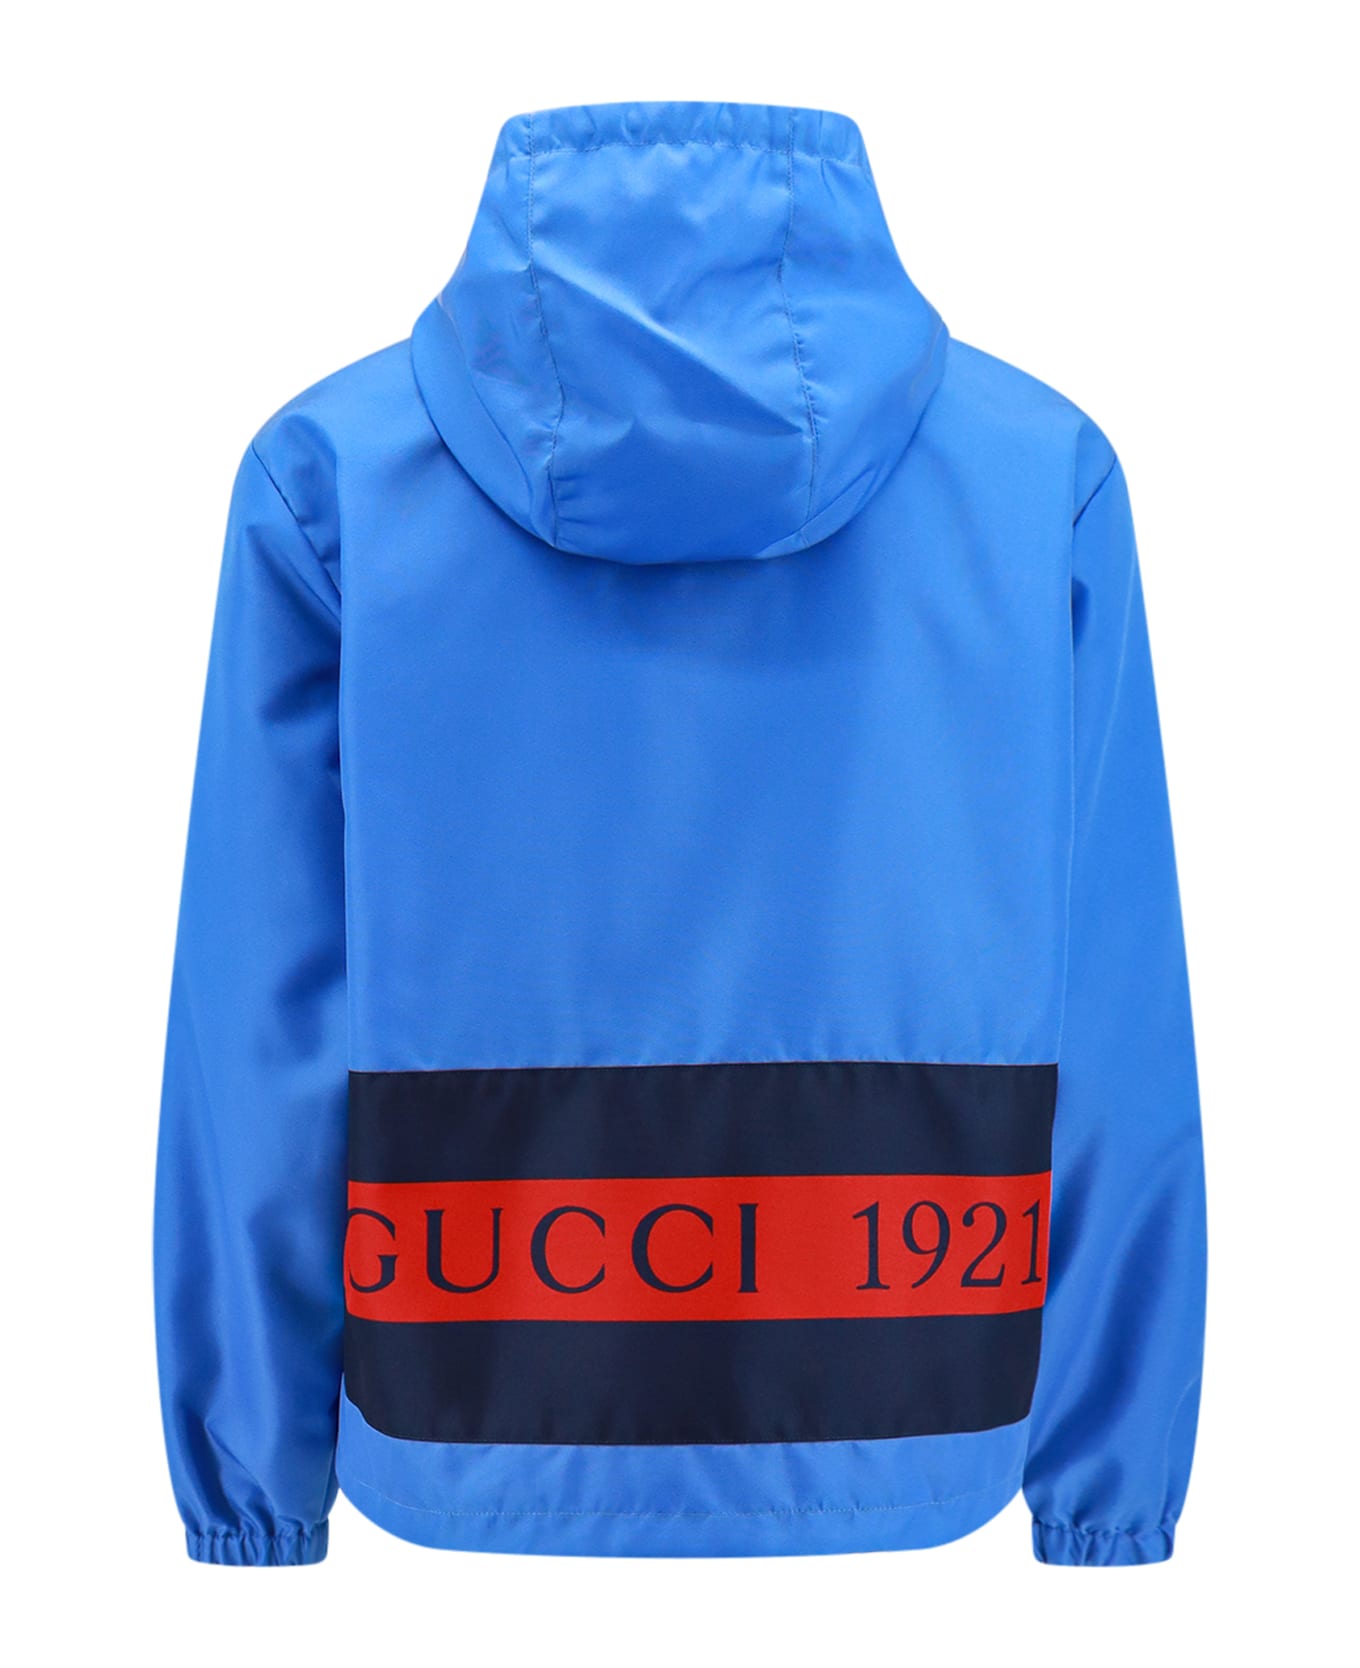 Gucci Jacket - Blue